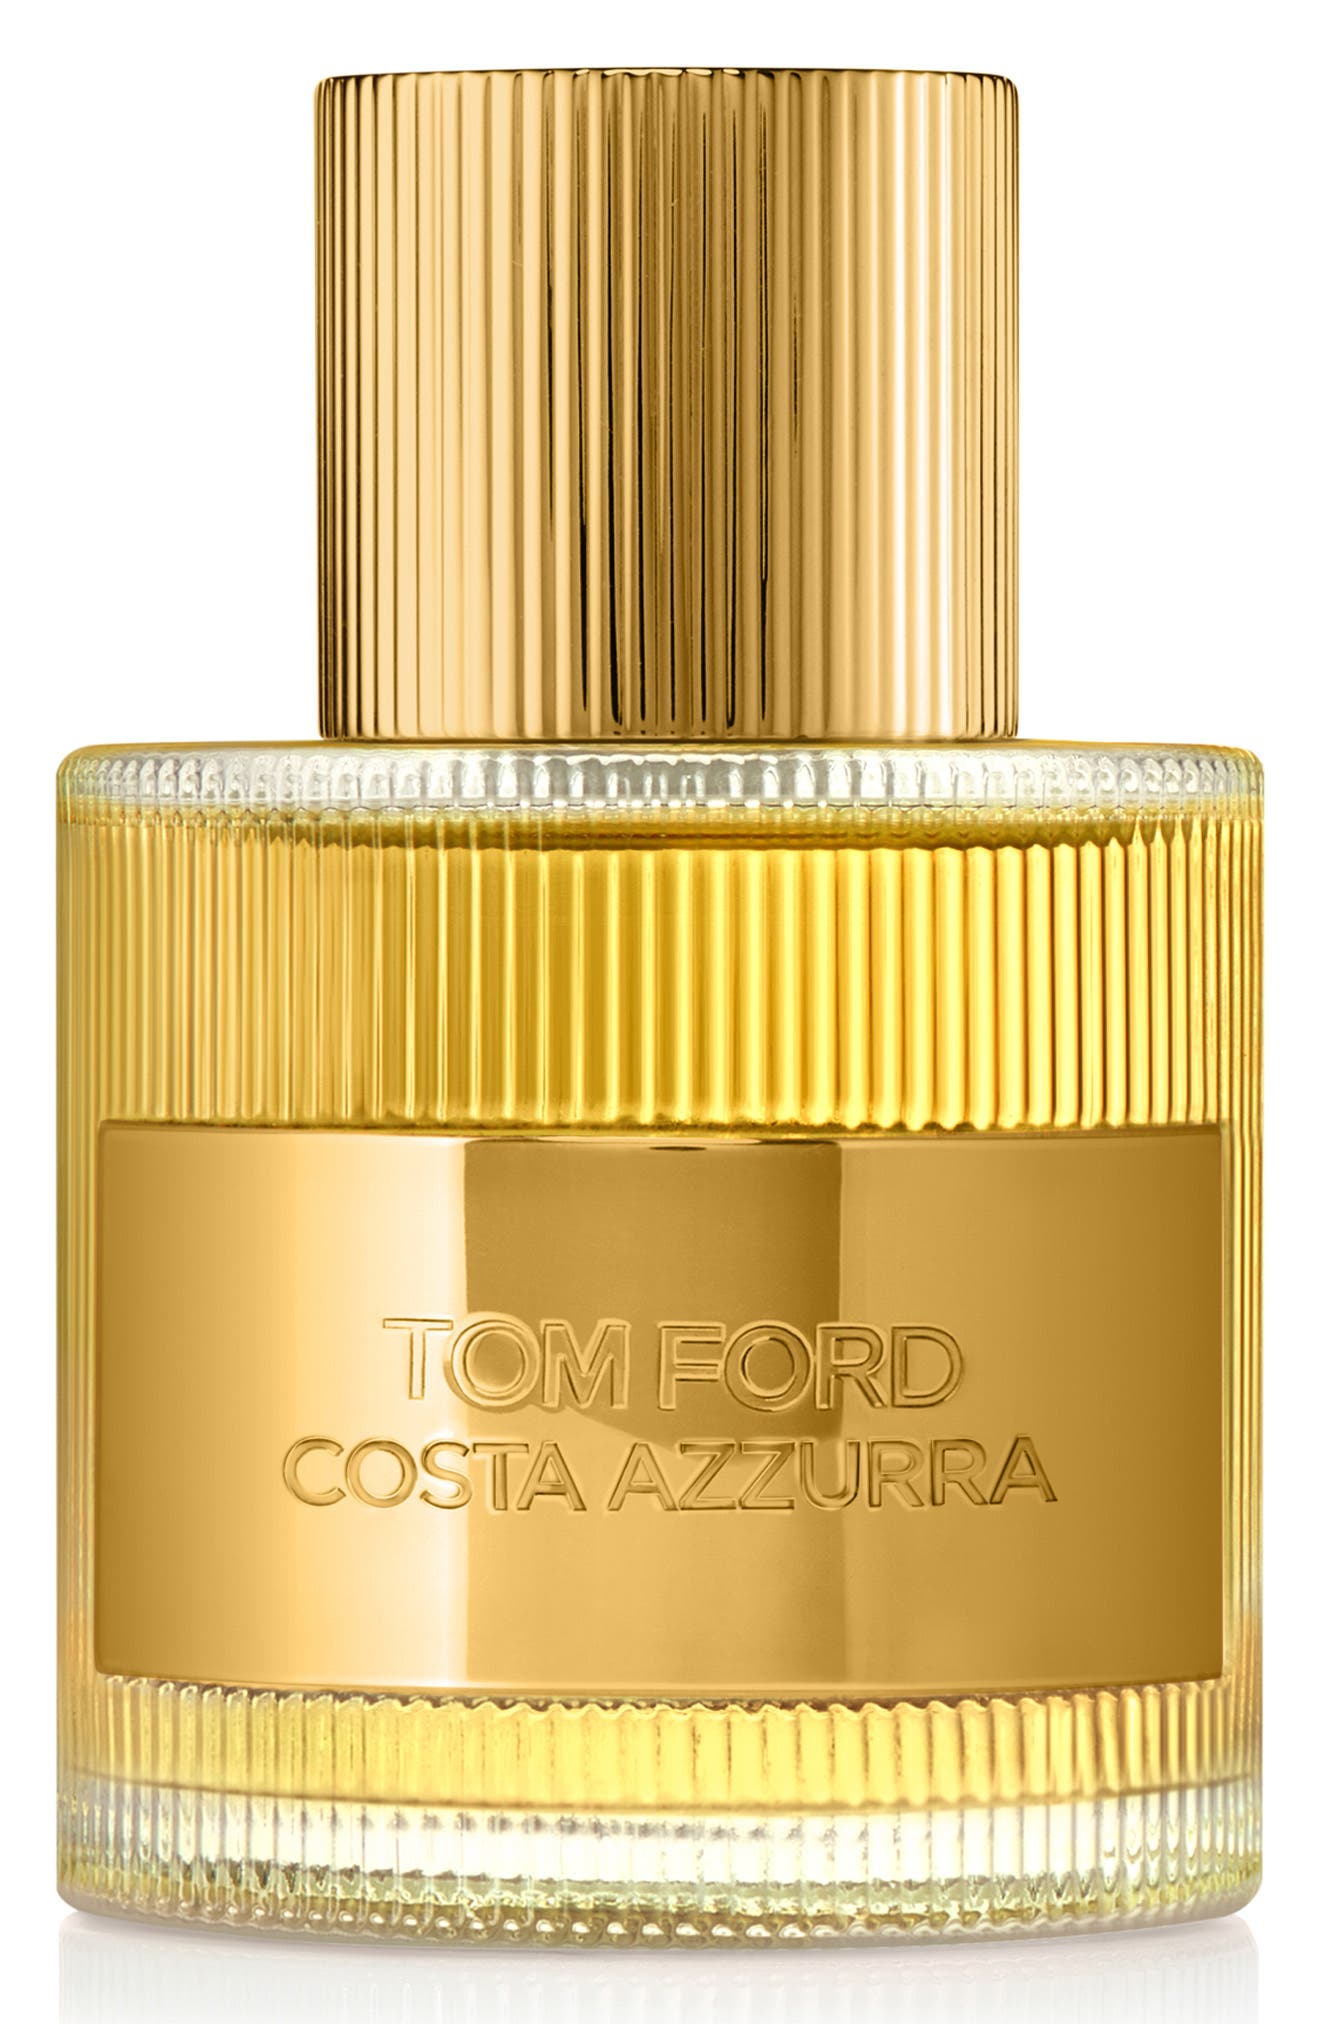 TOM FORD Costa Azzurra Eau de Parfum Spray 1.7 oz